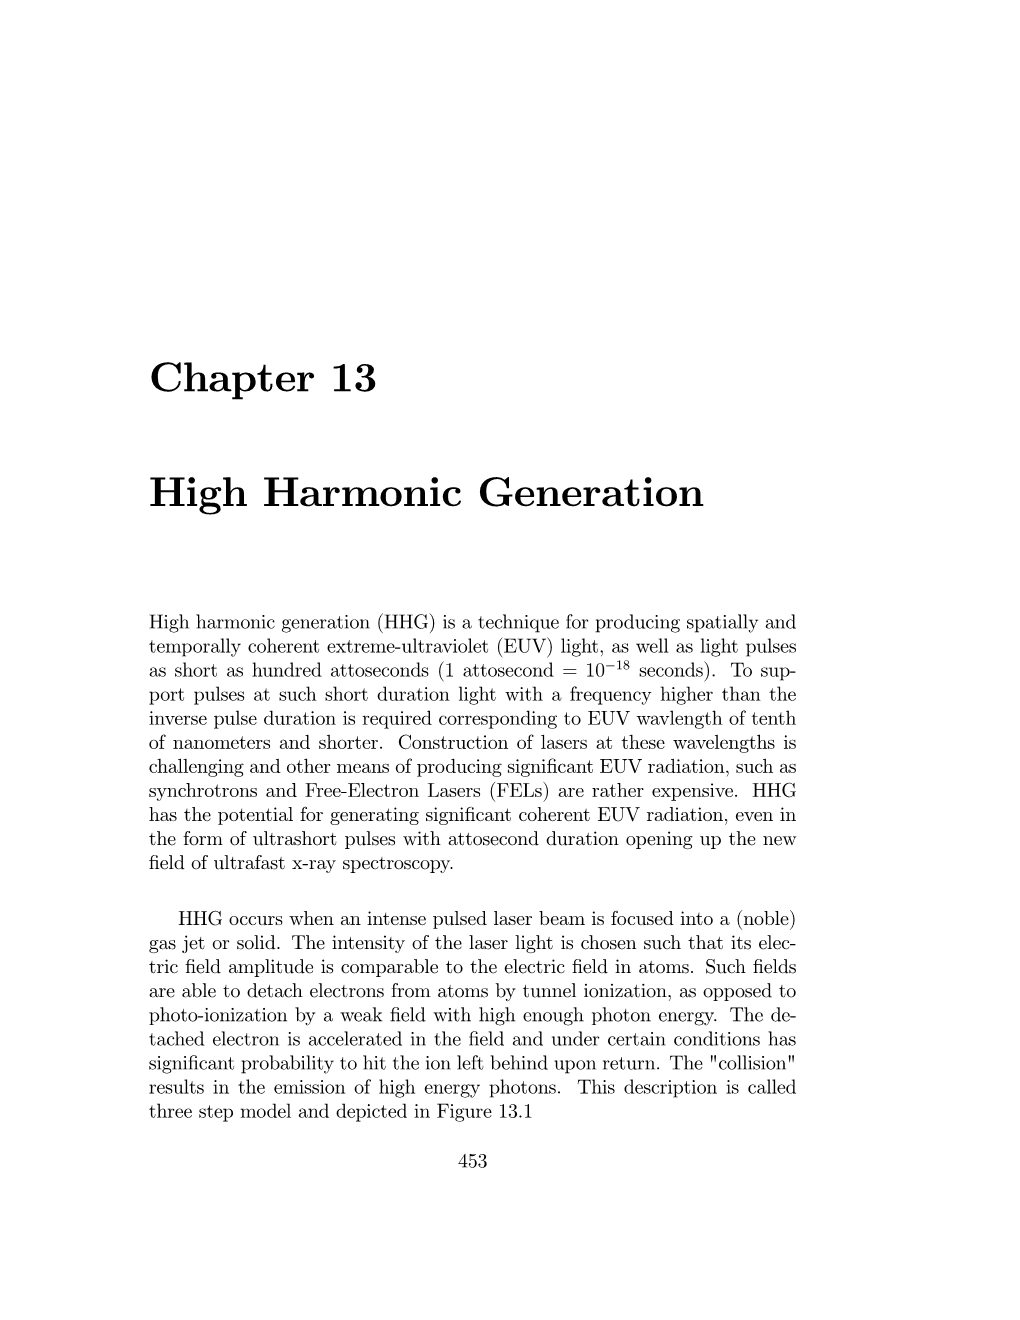 Chapter 13 High Harmonic Generation